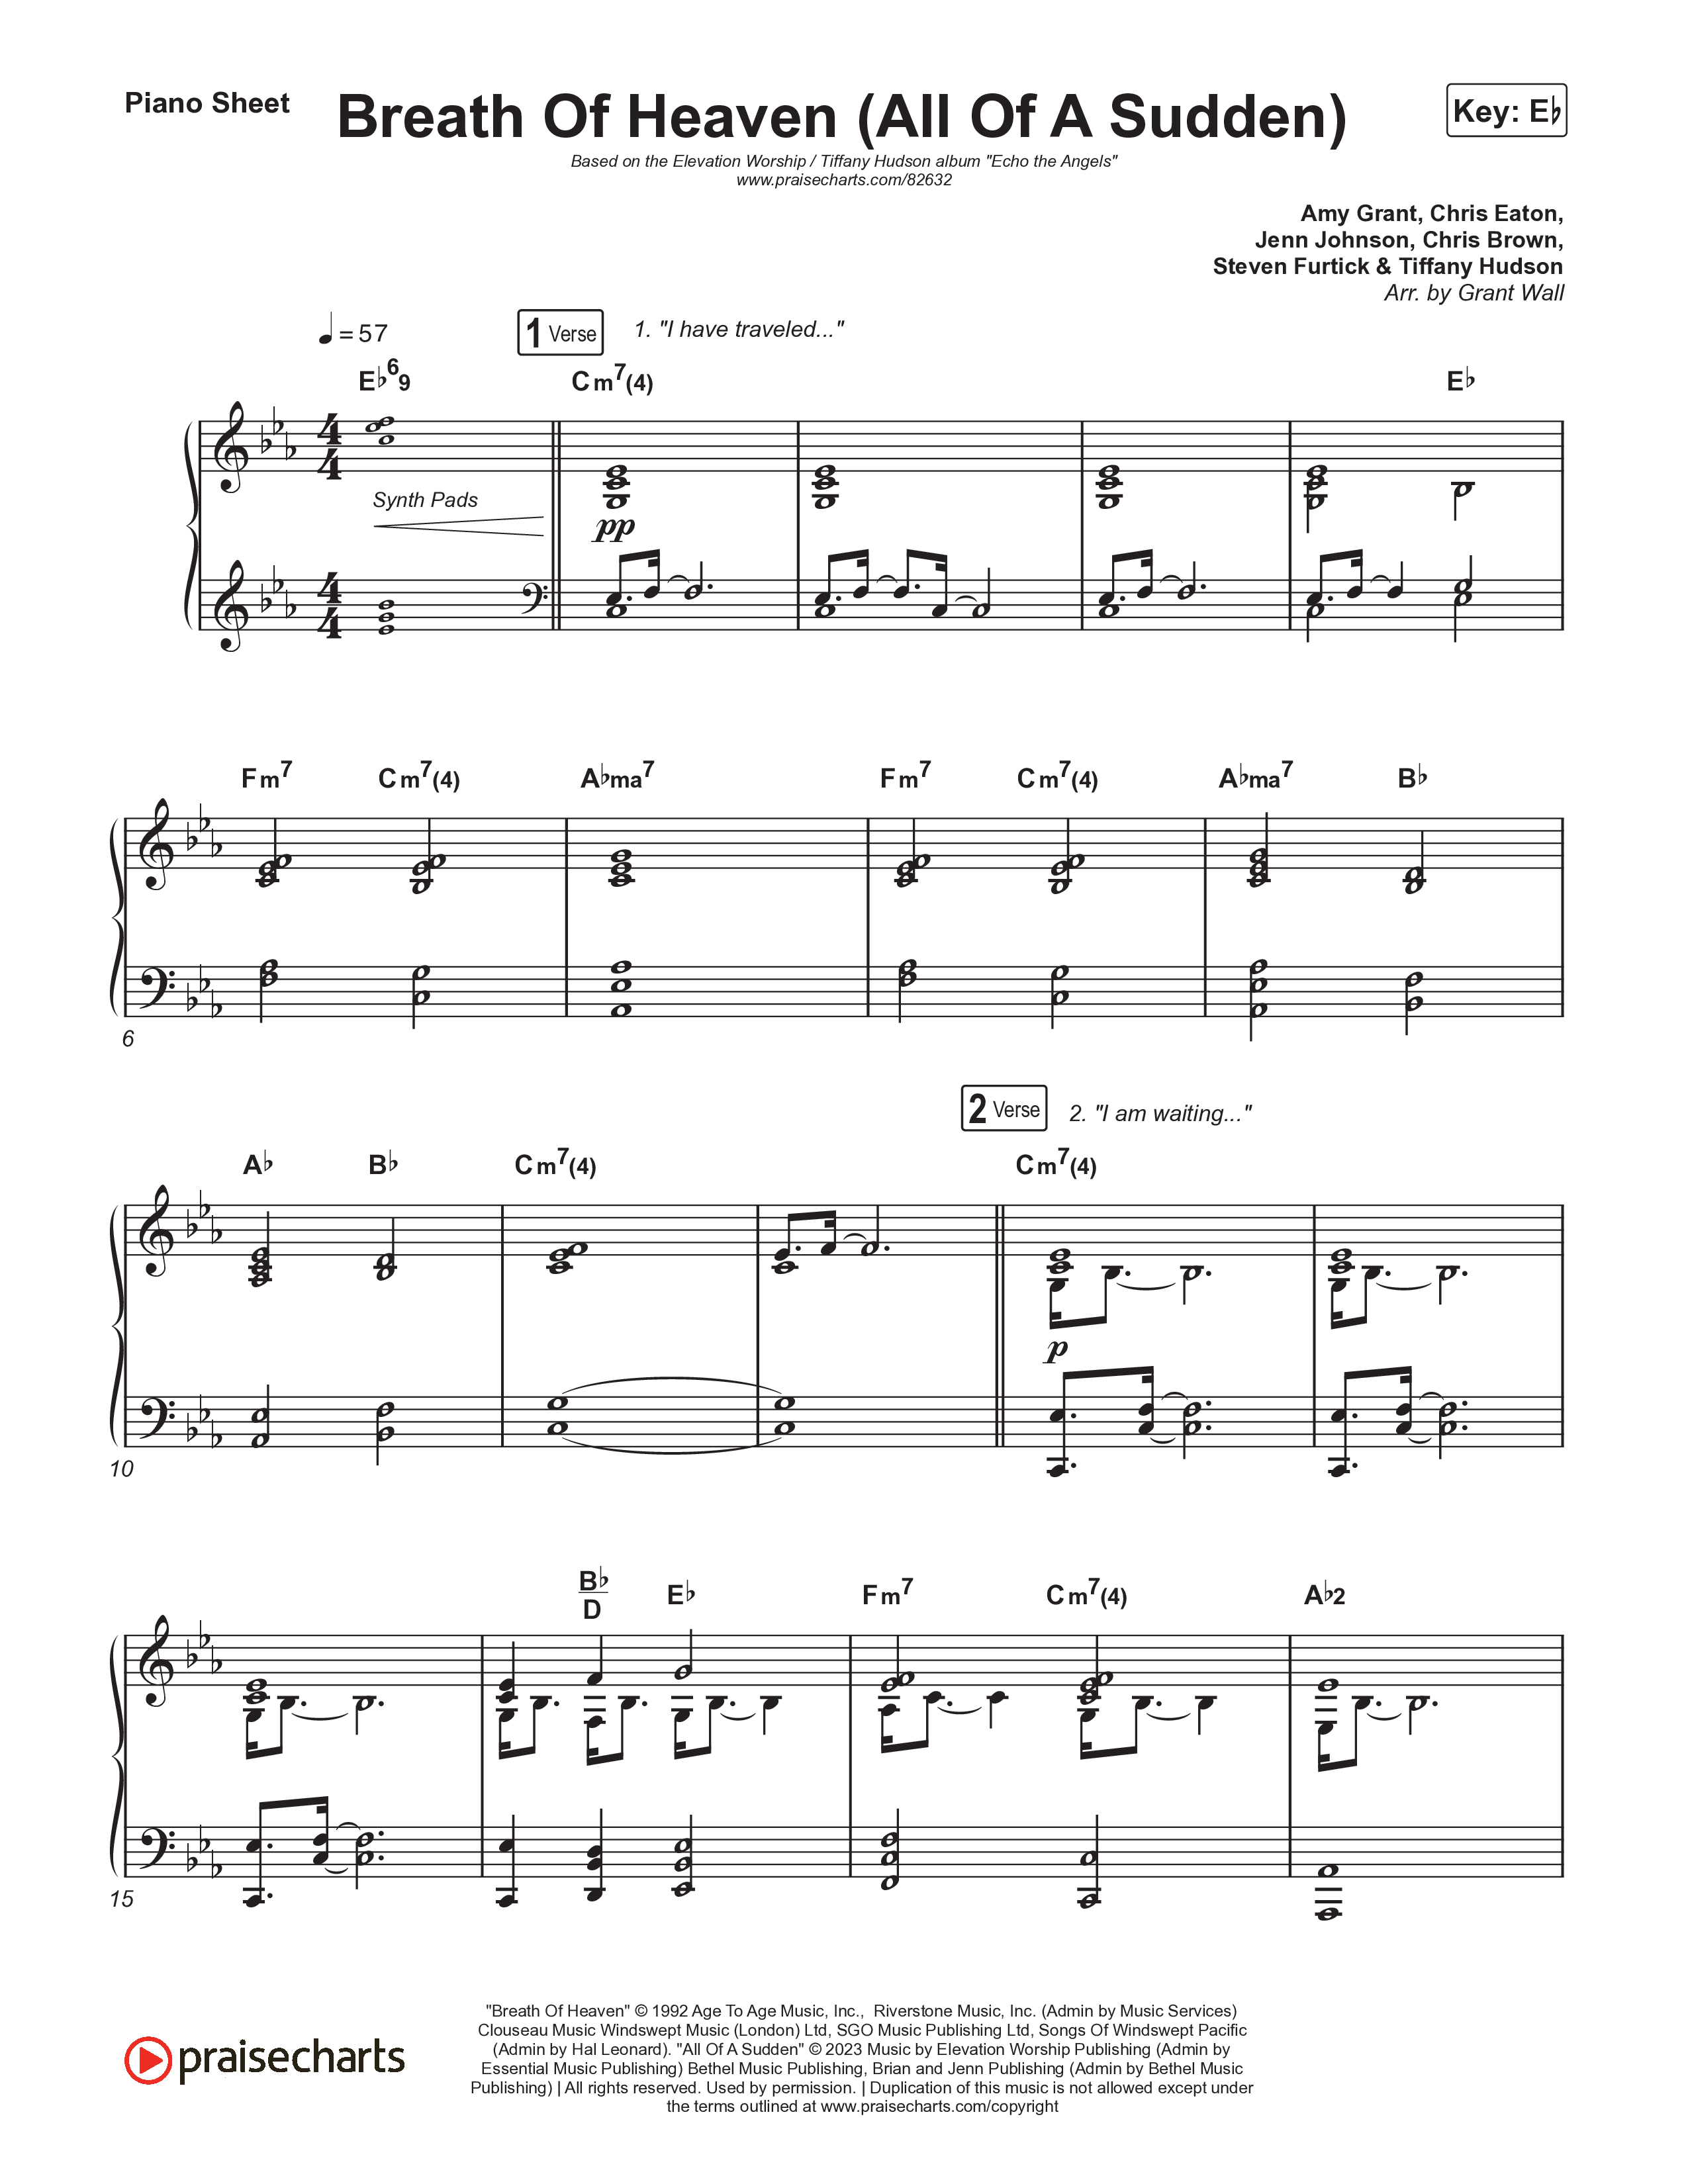 Breath Of Heaven (All Of A Sudden) Piano Sheet (Elevation Worship / Tiffany Hudson)